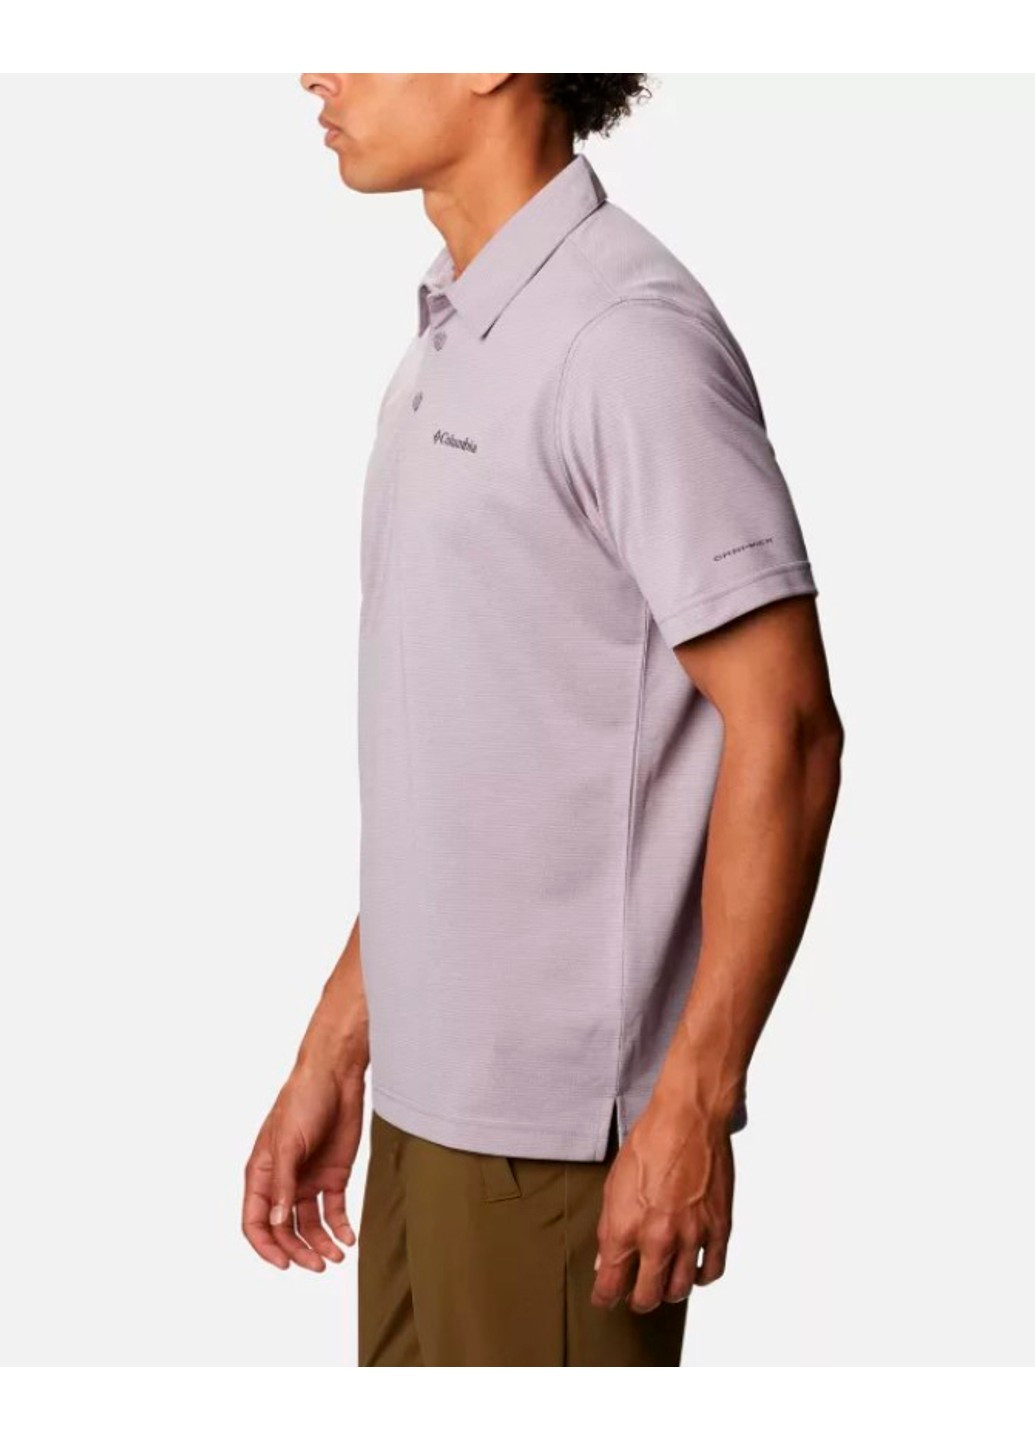 Сиреневая футболка-1931941-554 xxl рубашка-поло мужская havercamp™ pique polo сиреневый р.xxl для мужчин Columbia